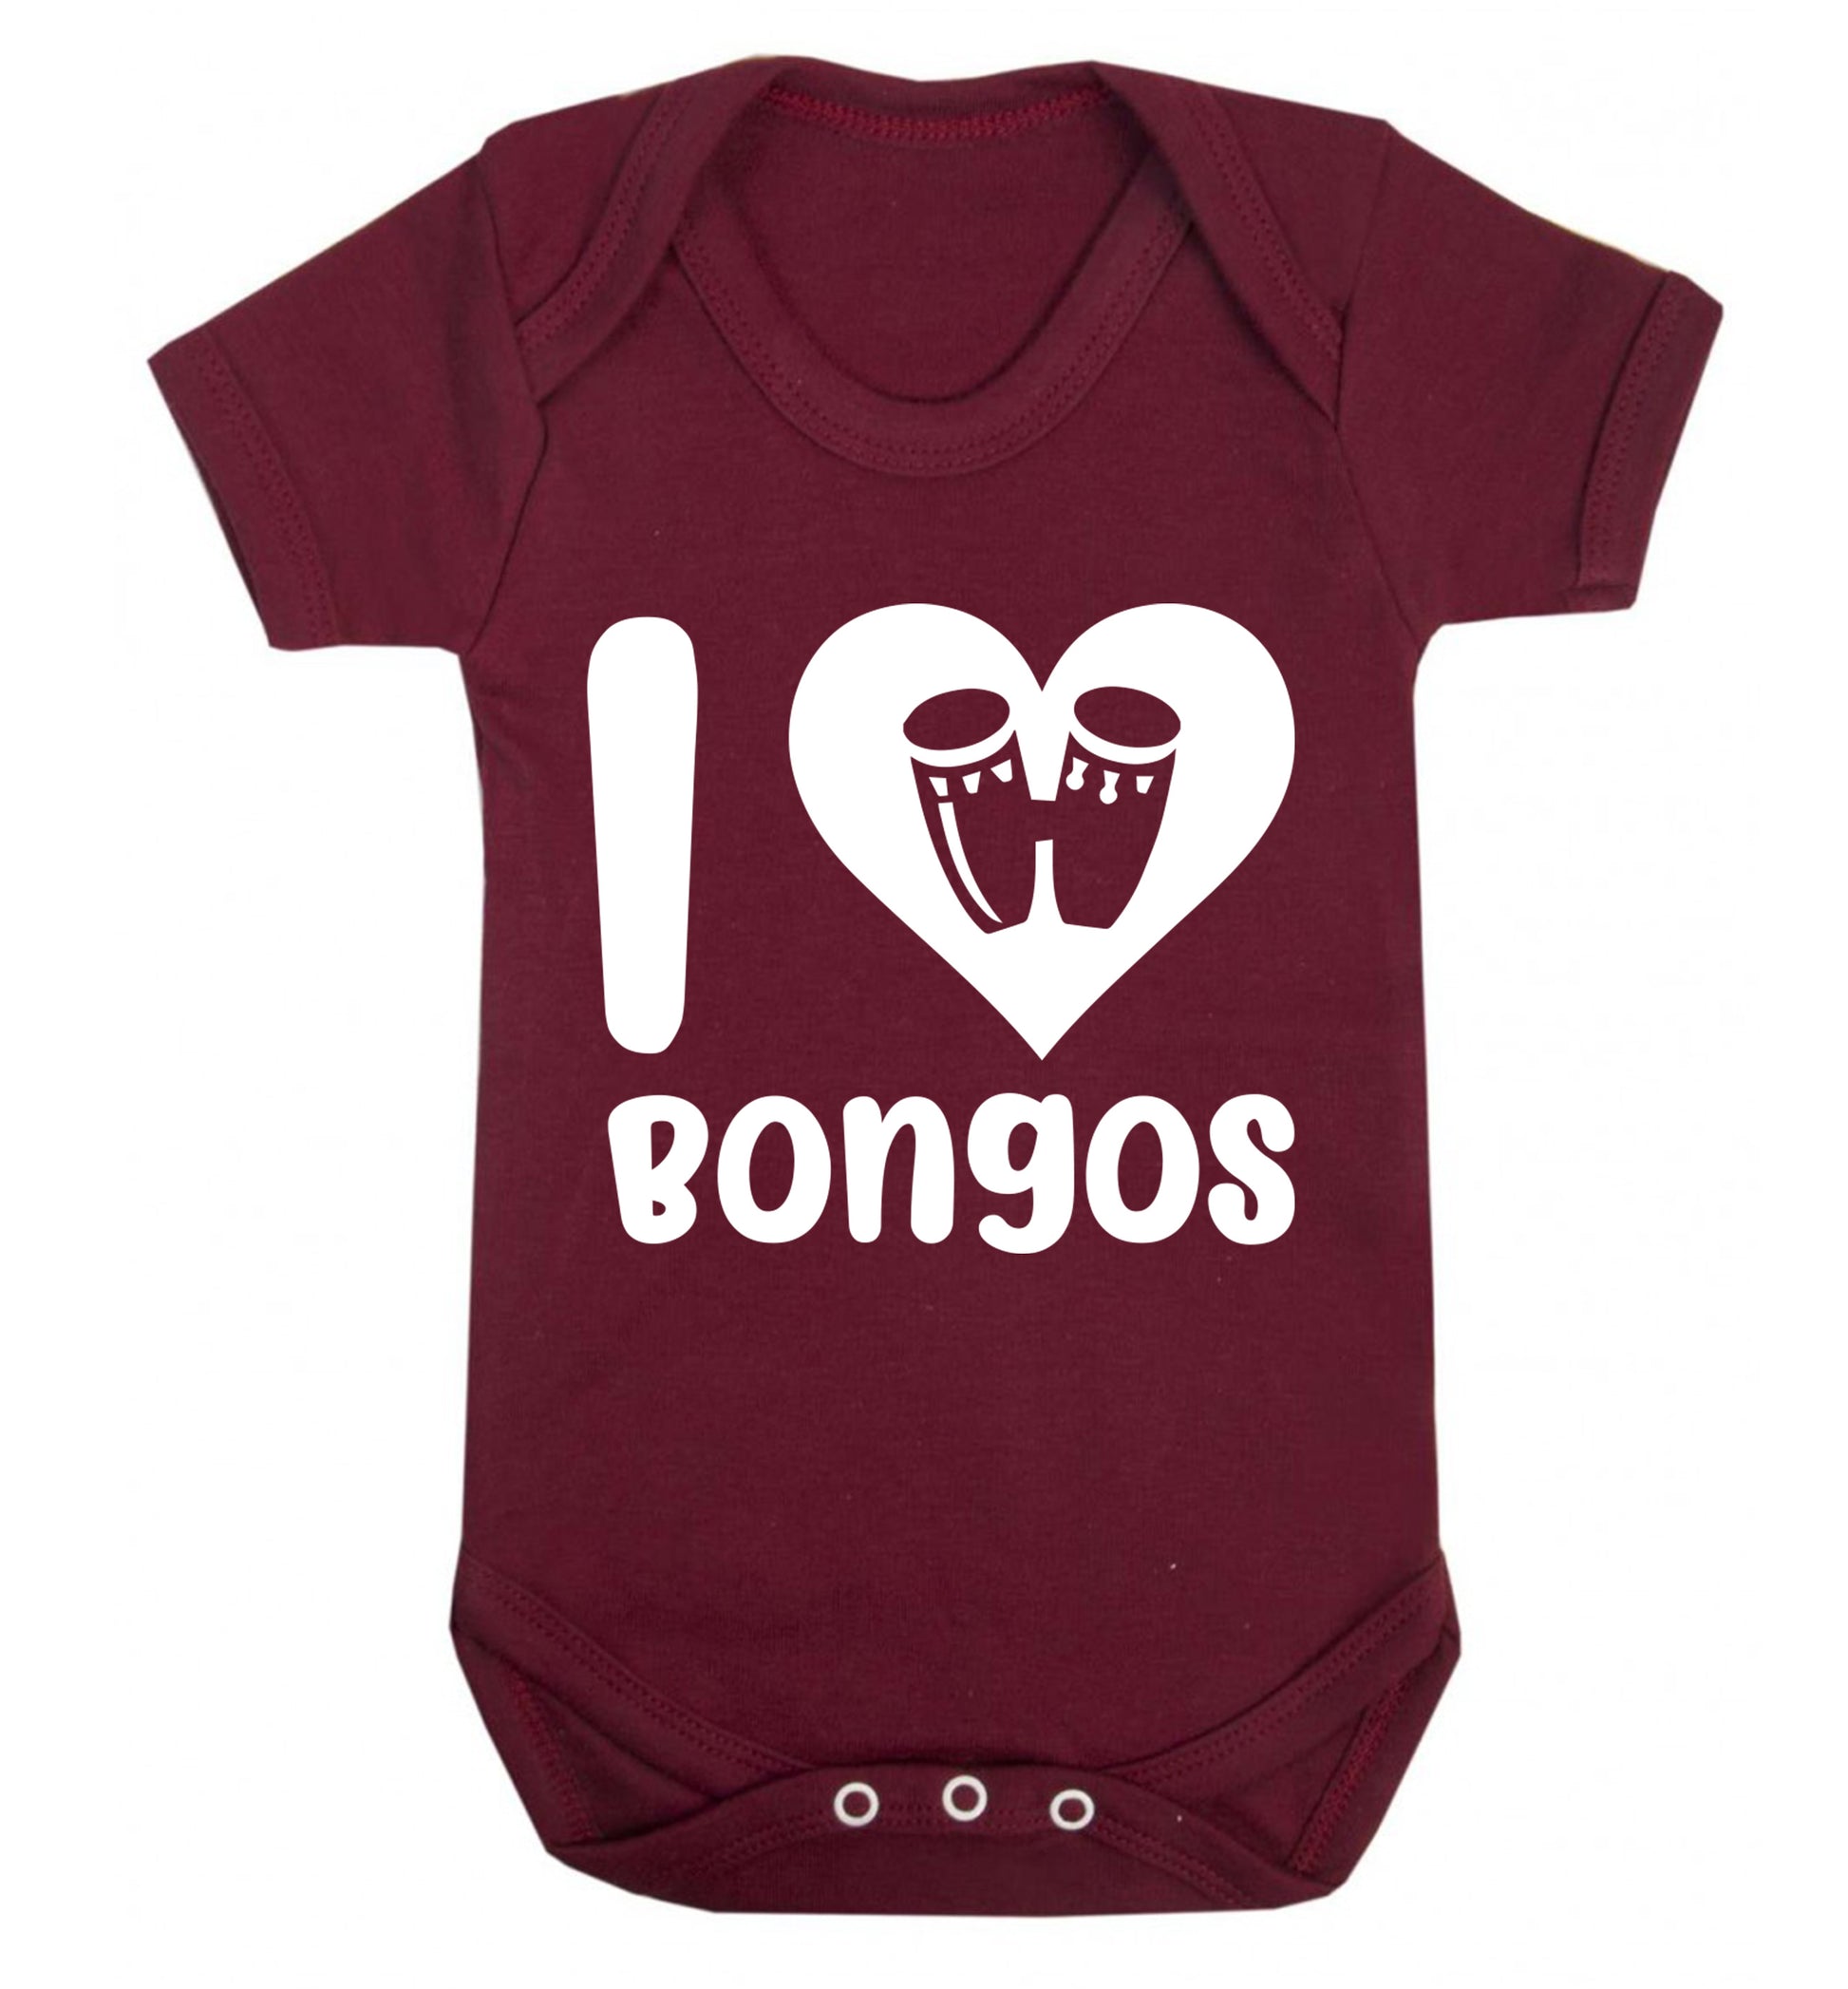 I love bongos Baby Vest maroon 18-24 months